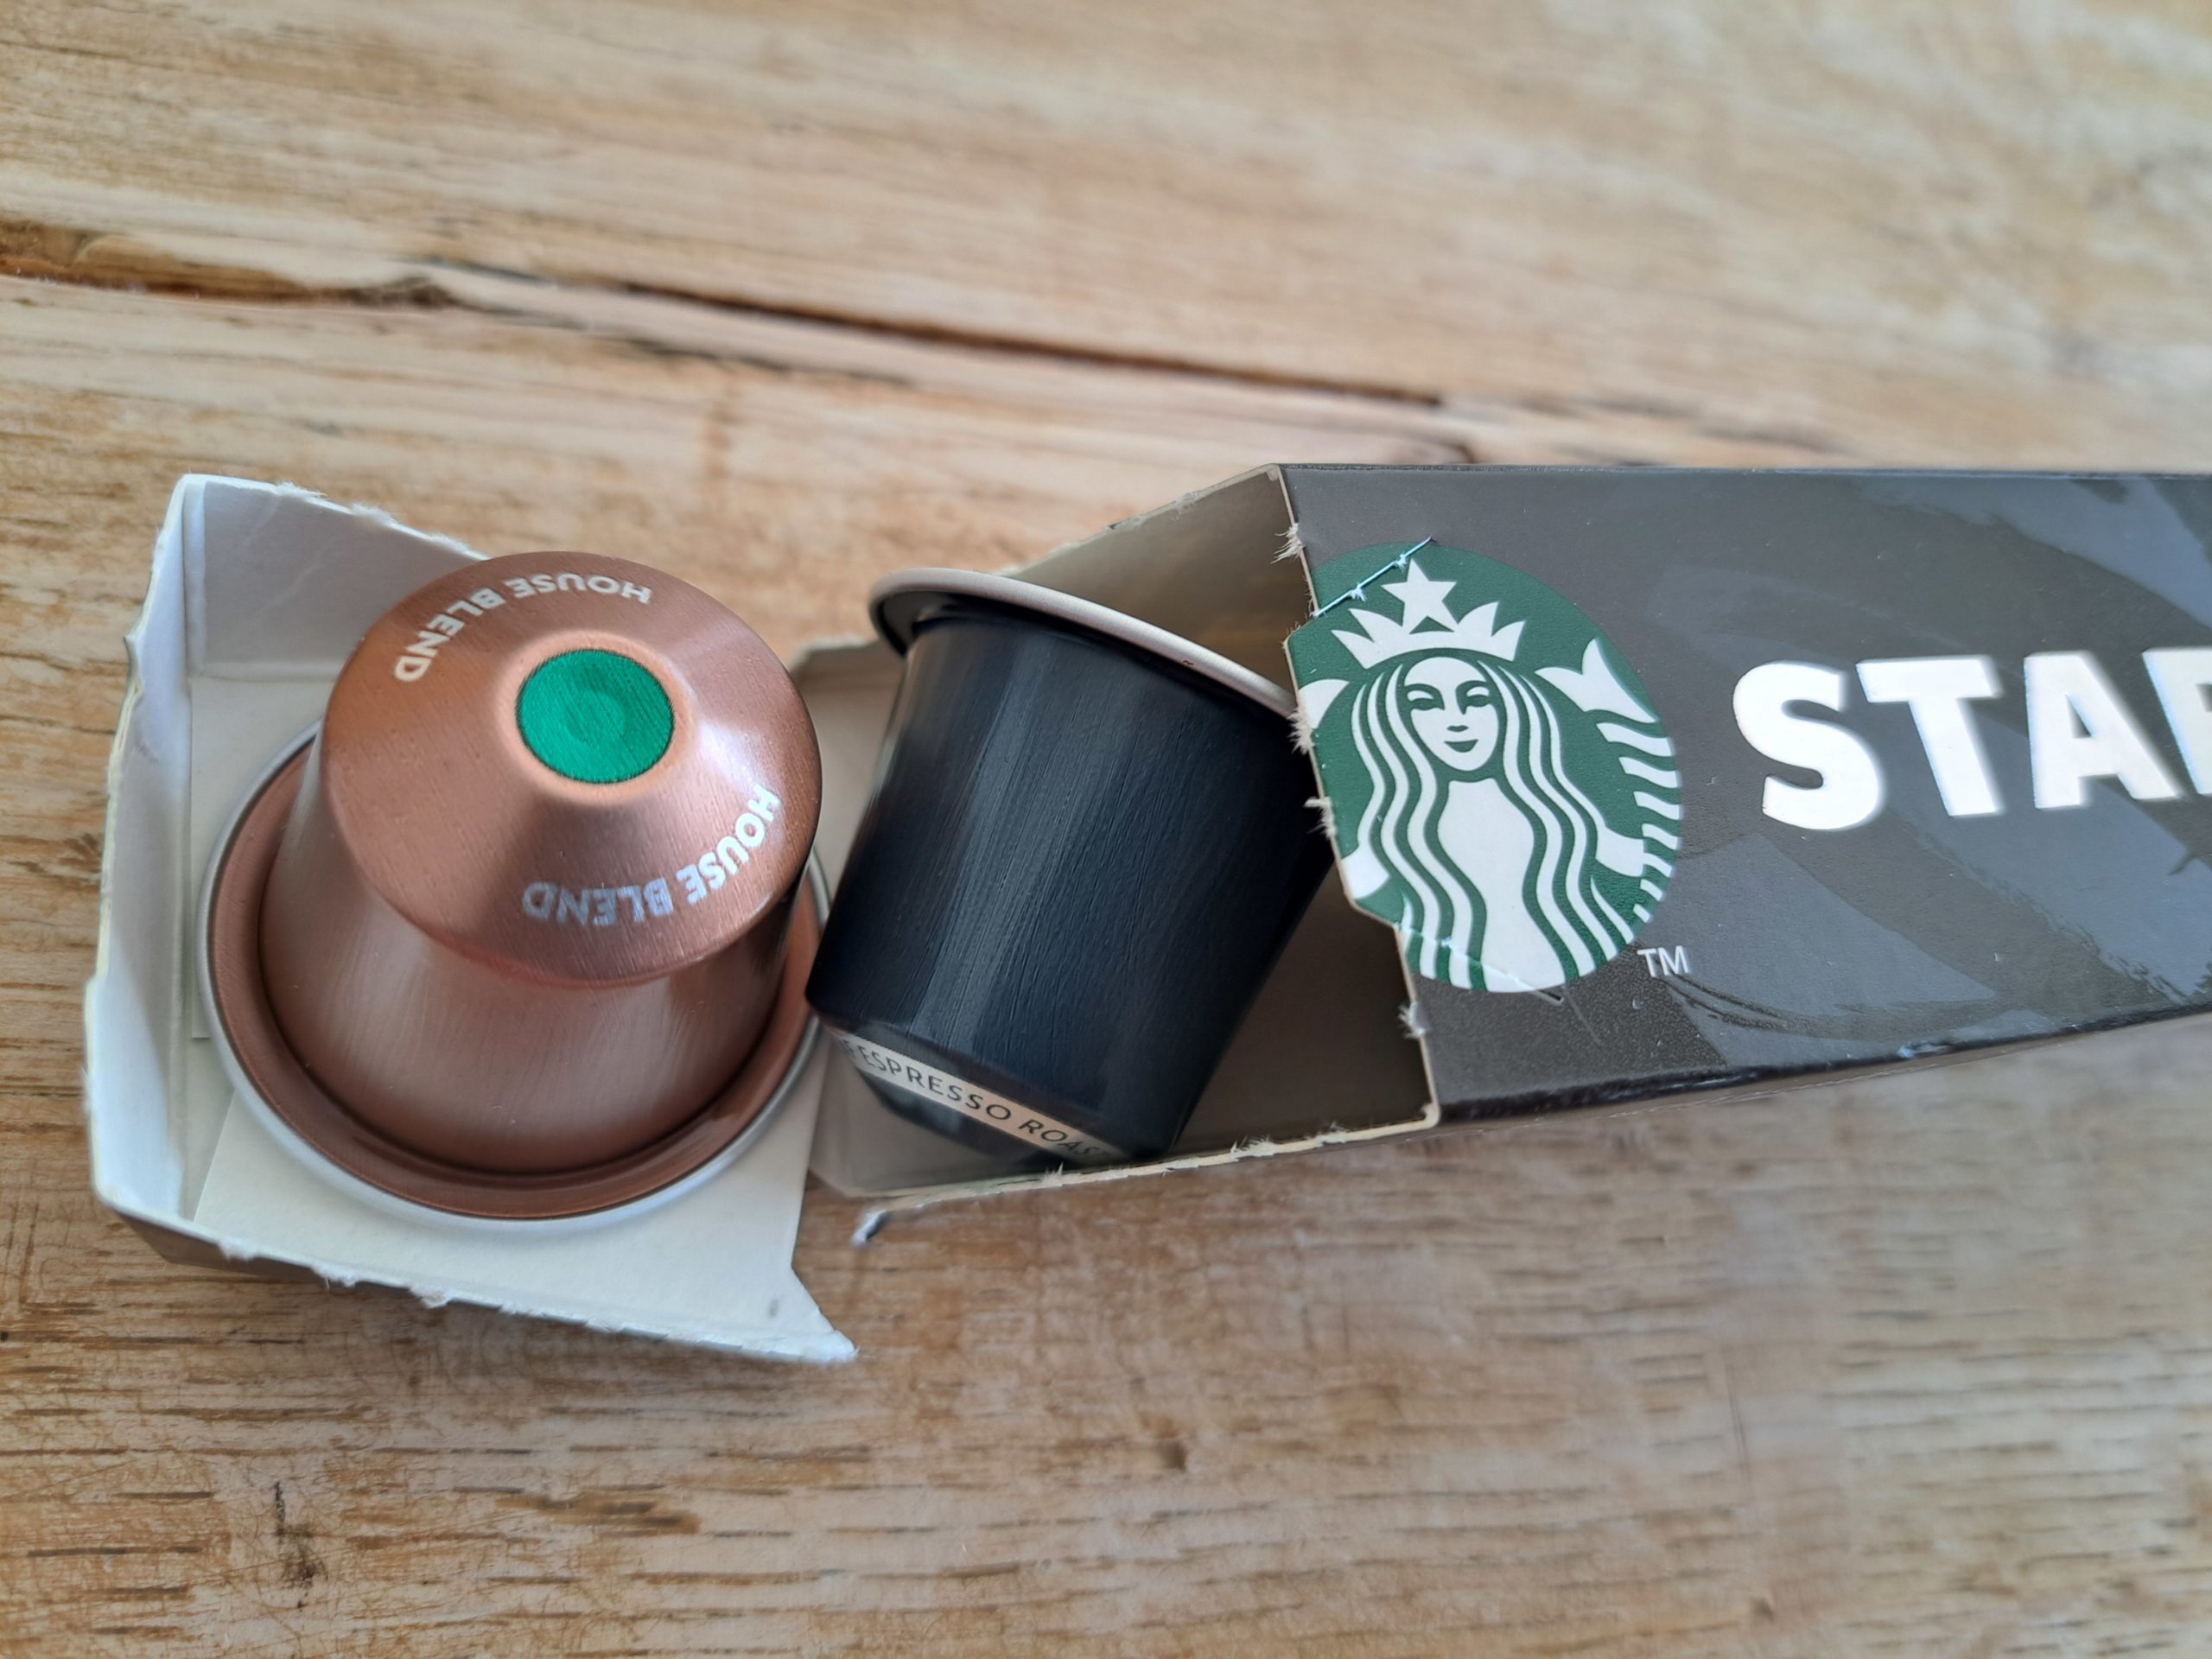 Starbucks by Nespresso - Nestlé